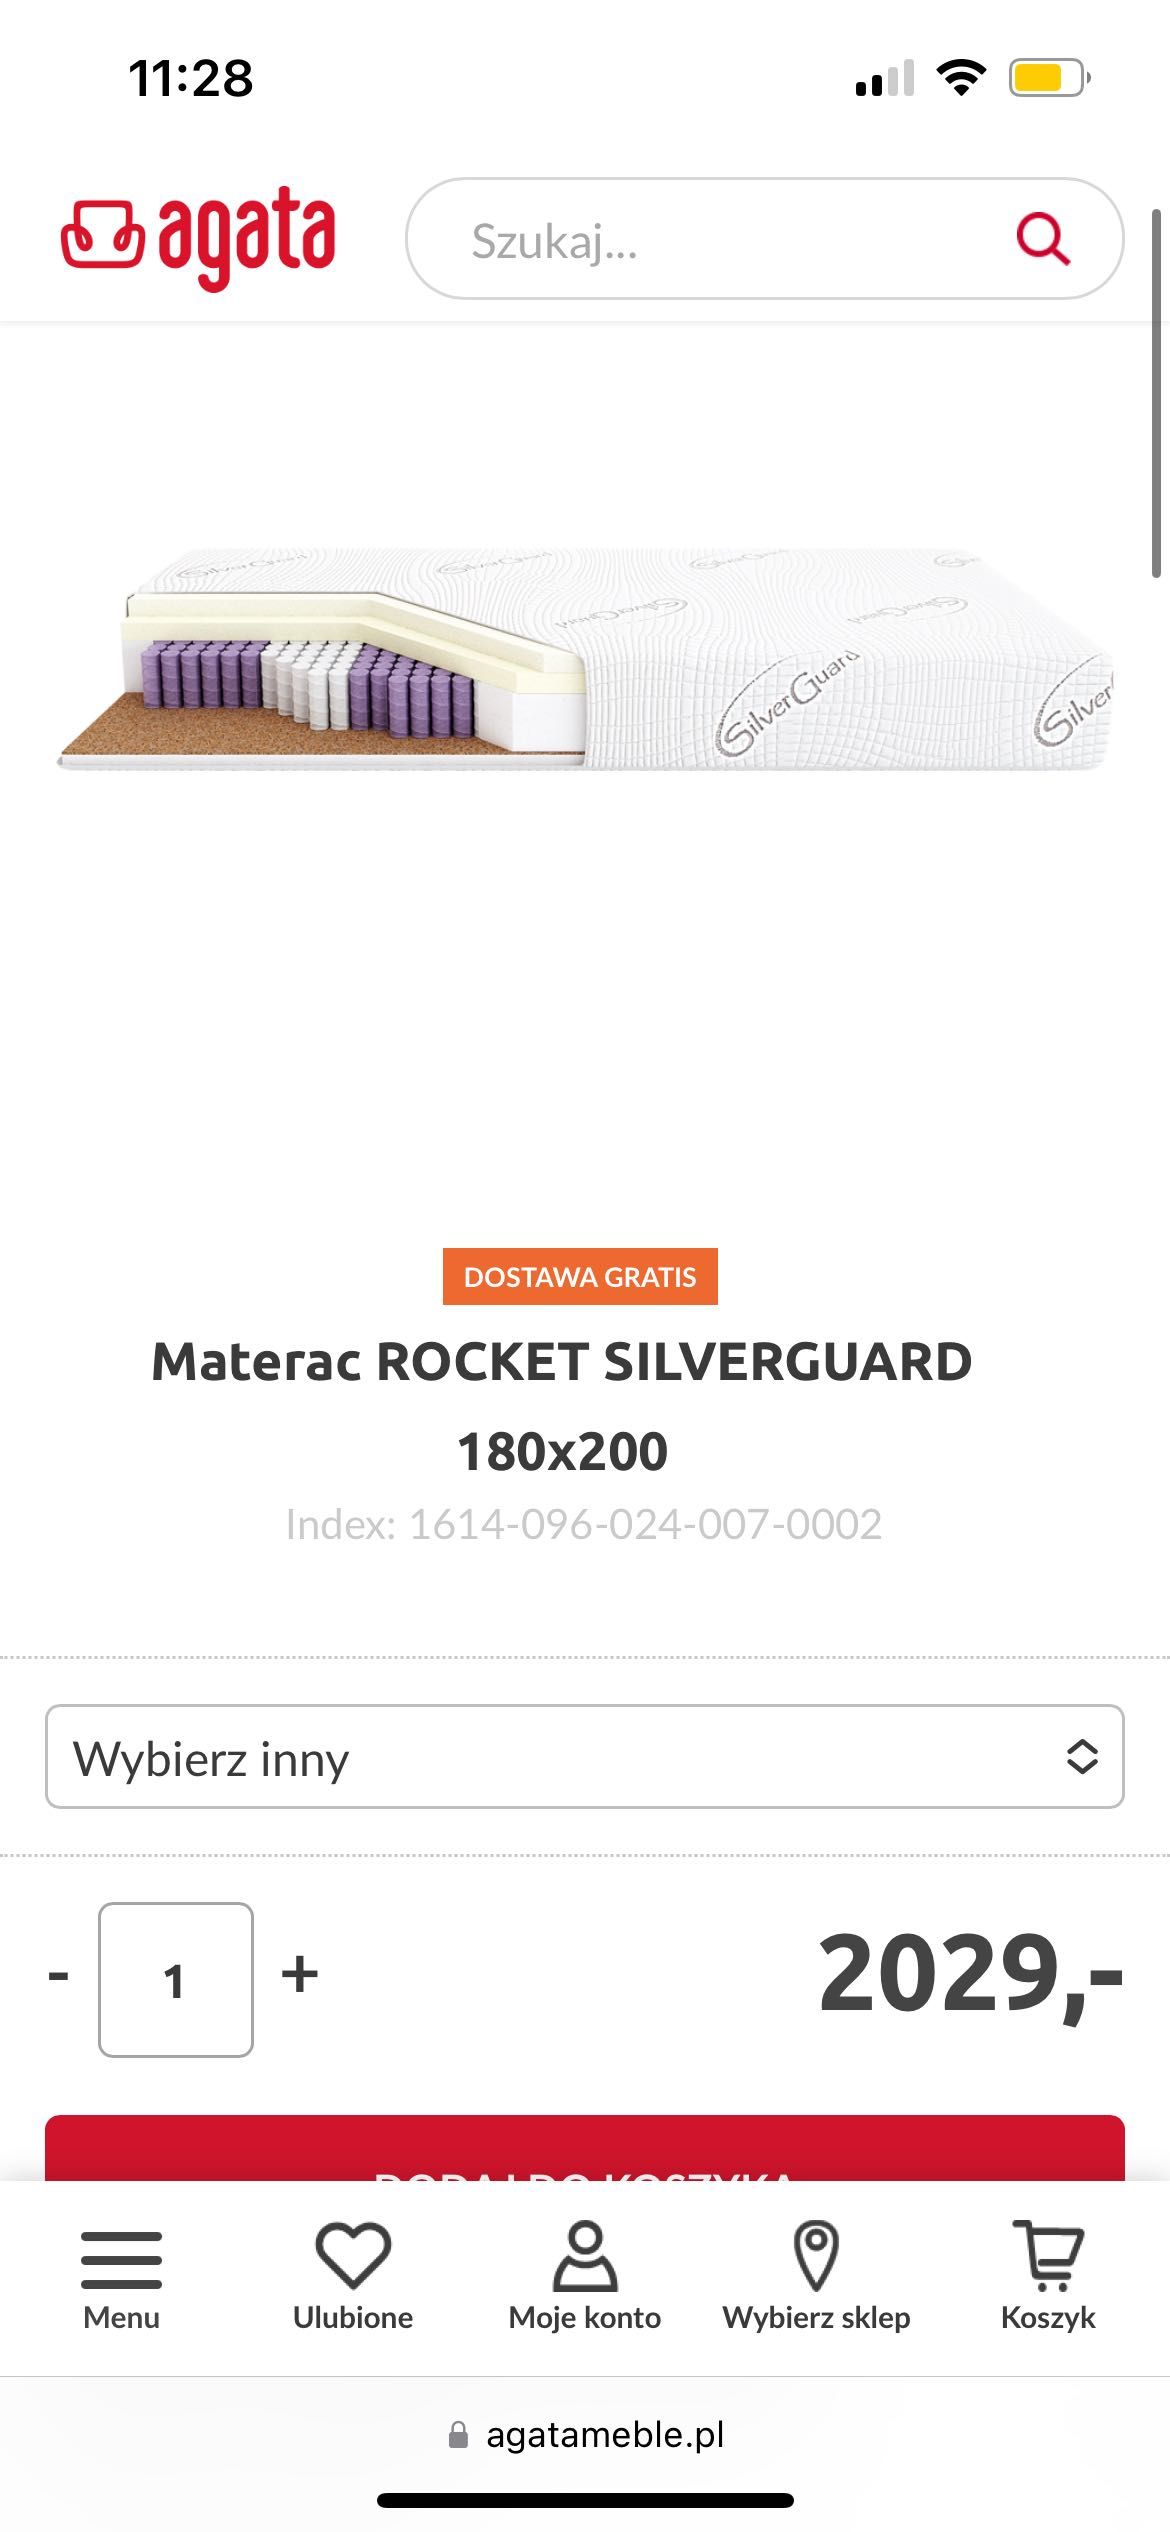 Materac ROCKET silverguad 180x200